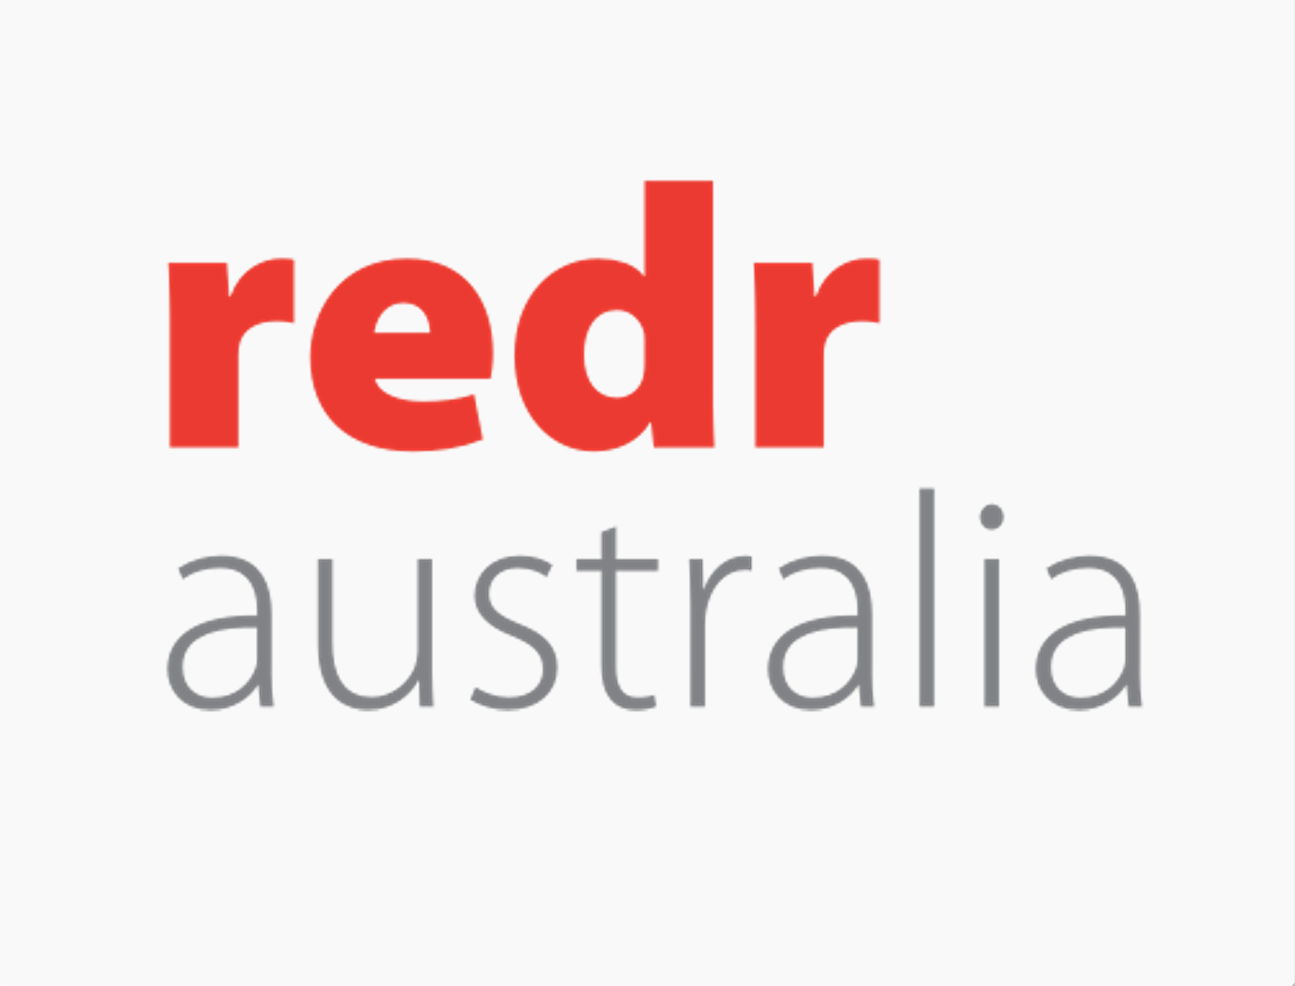 RedR Australia